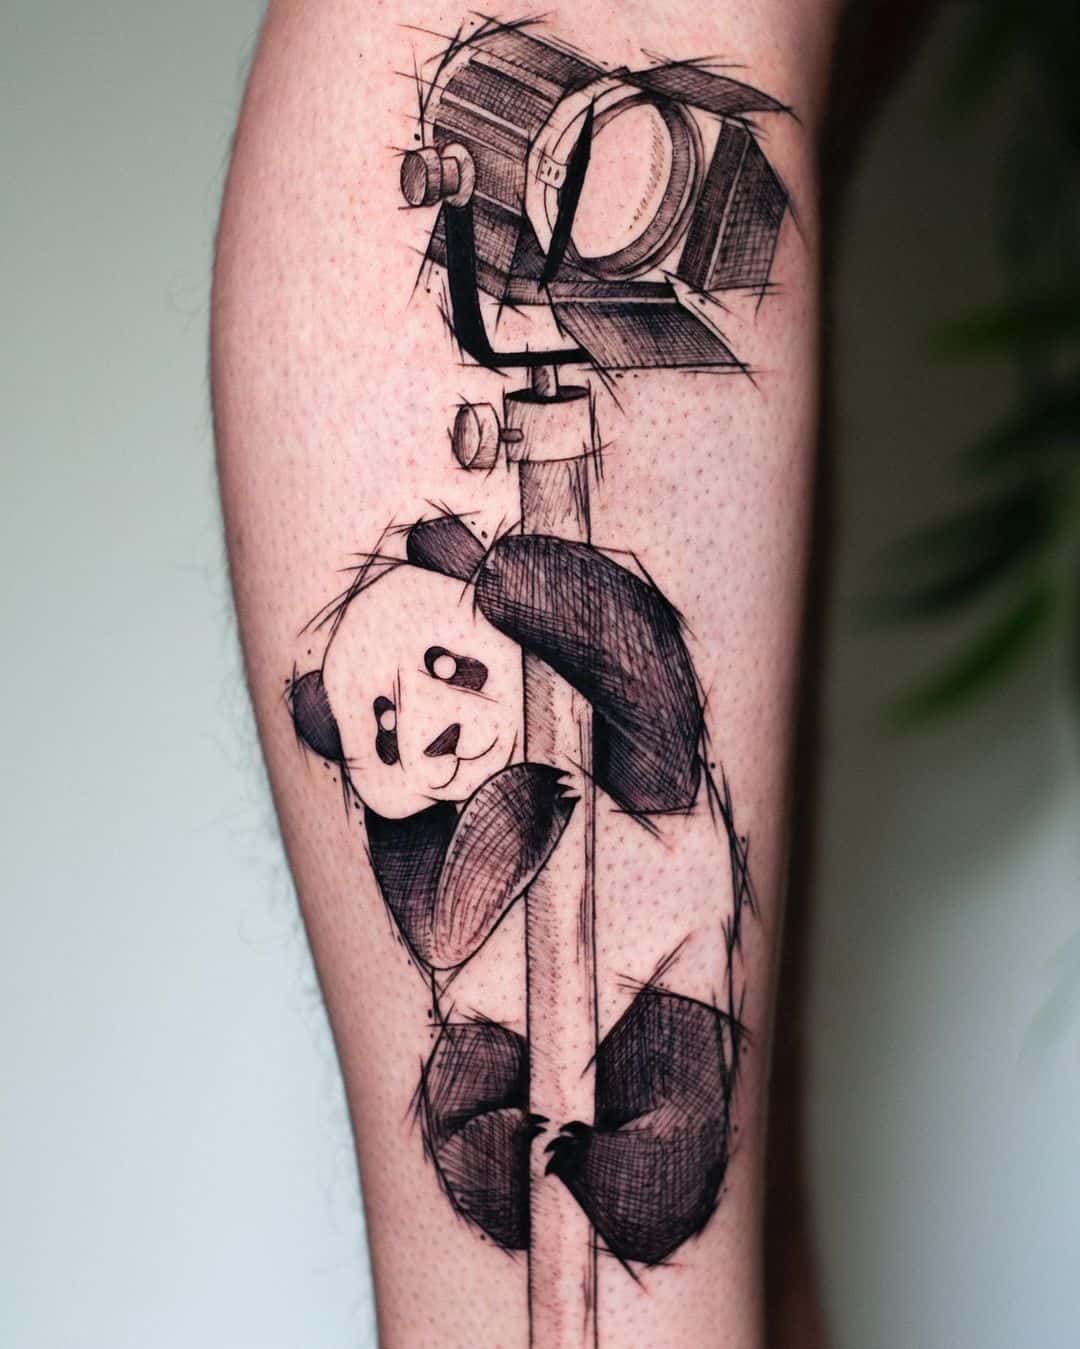 Sleepy Panda Temporary Tattoo (Set of 3) – Small Tattoos